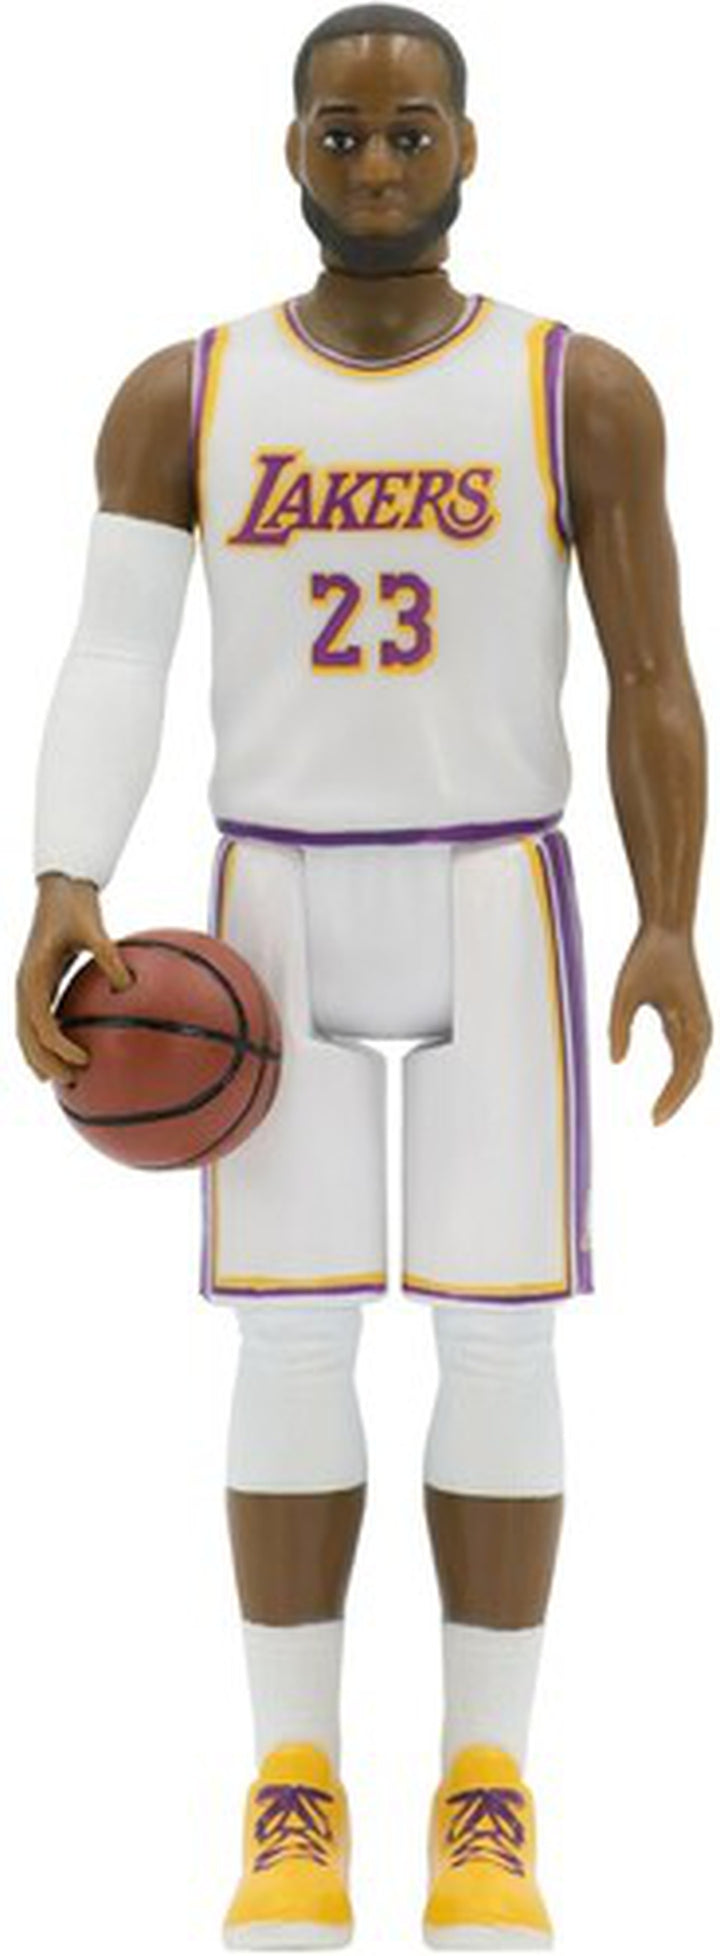 Super7 - NBA ReAction Figure - Lebron James Alternate (Lakers)